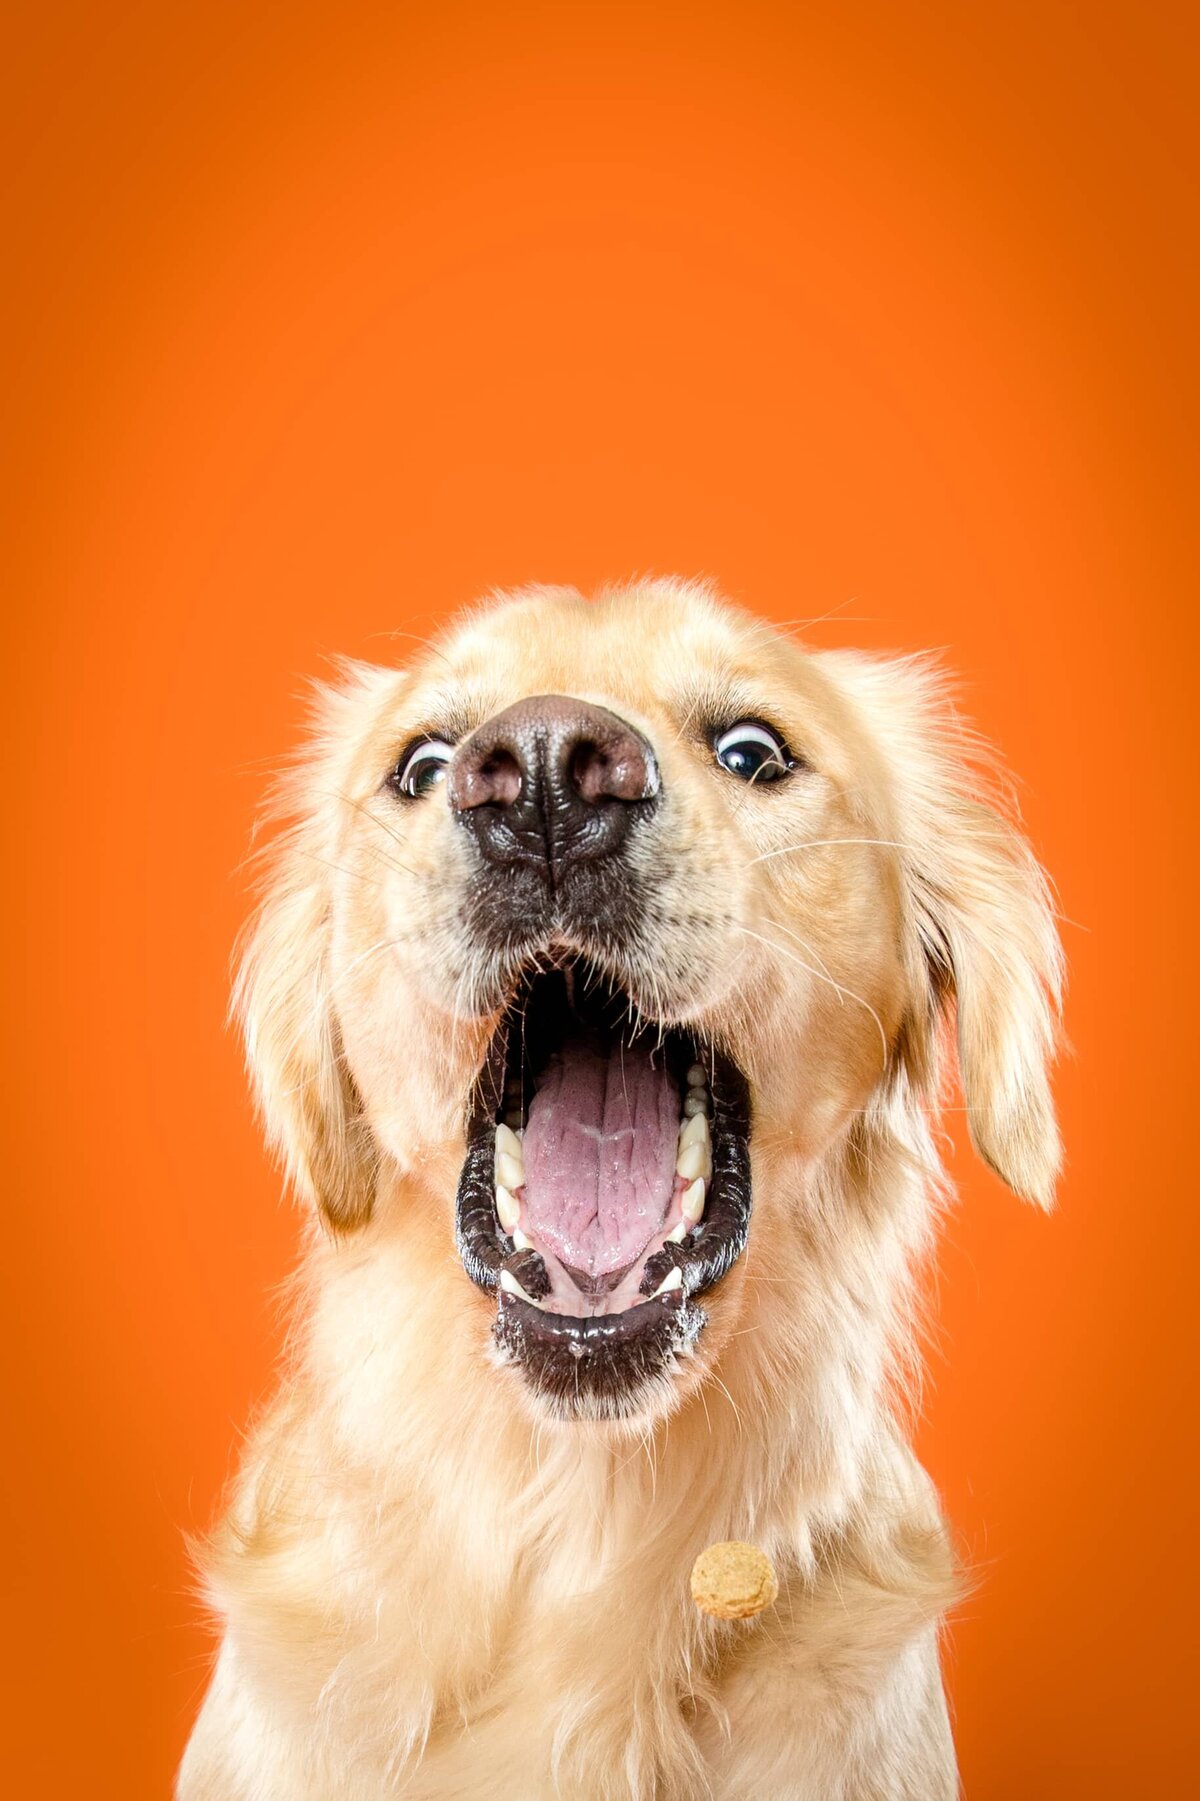 The Beloved Pup Photo Studio - South Eastern & Alabama Dog Photographer Portfolio 16